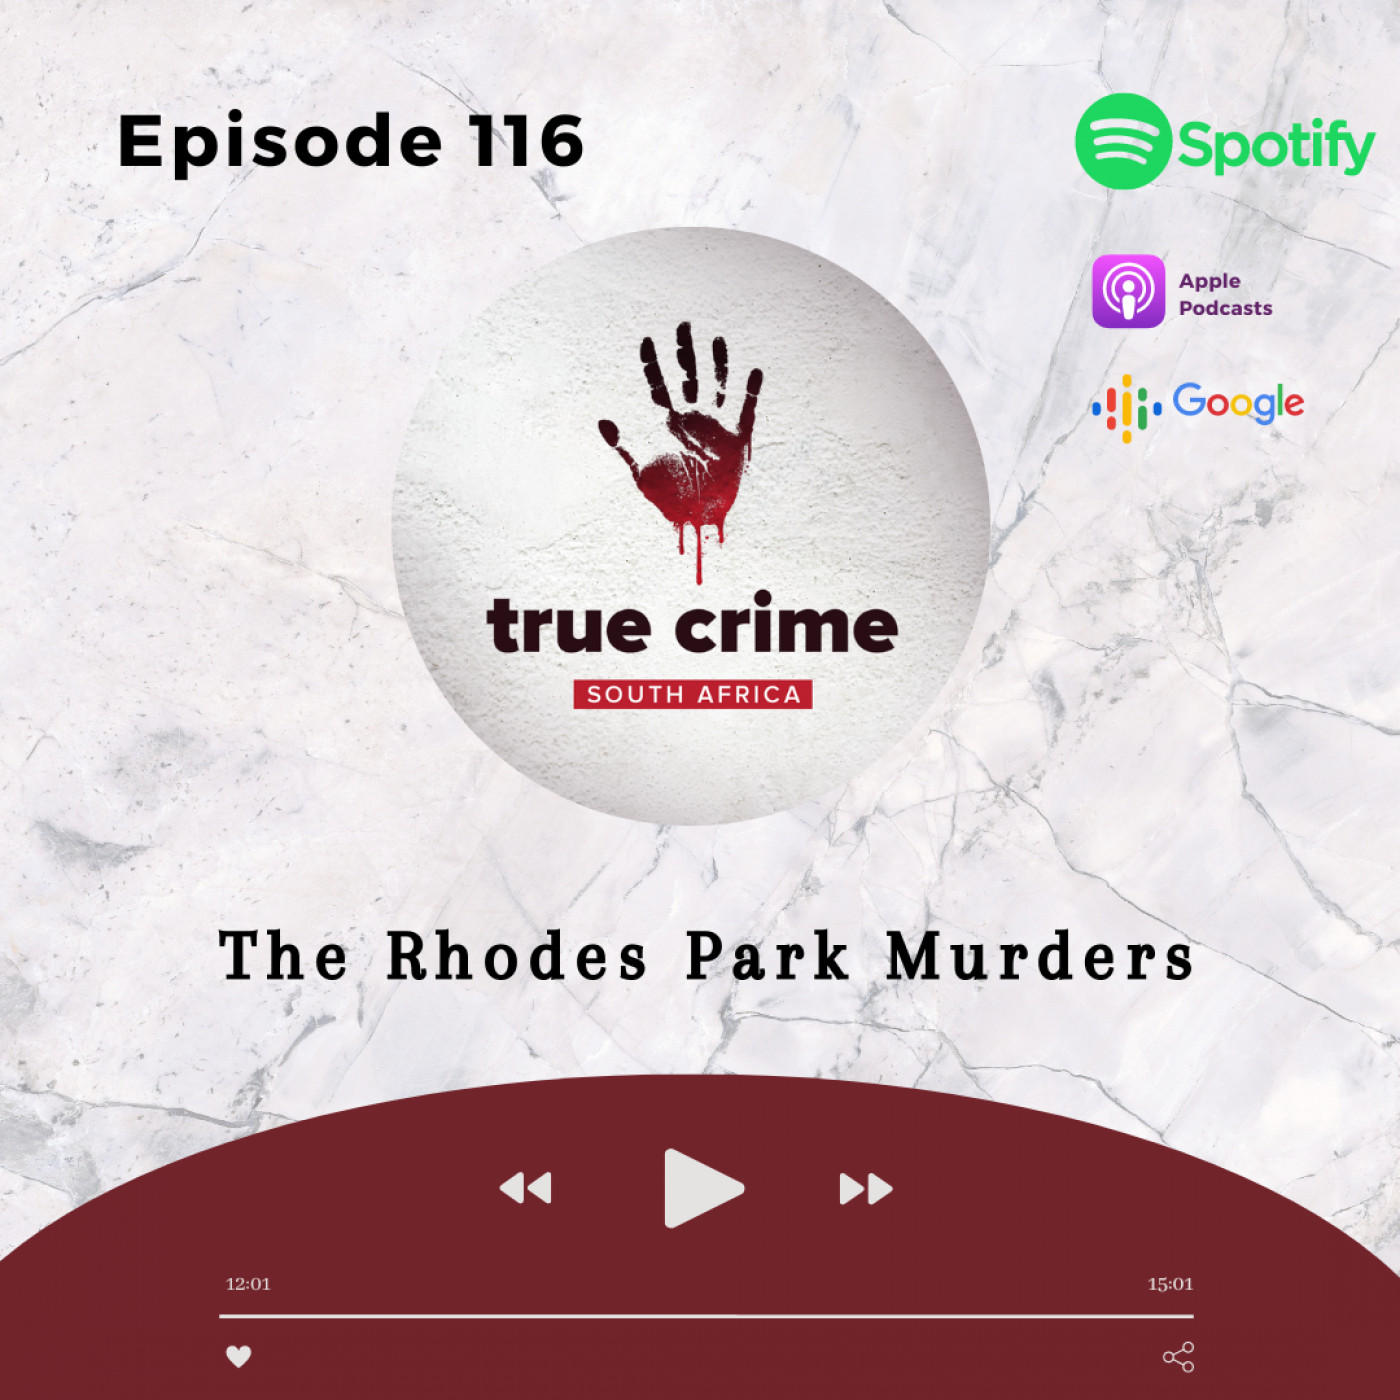 Episode 116 The Rhodes Park Murders